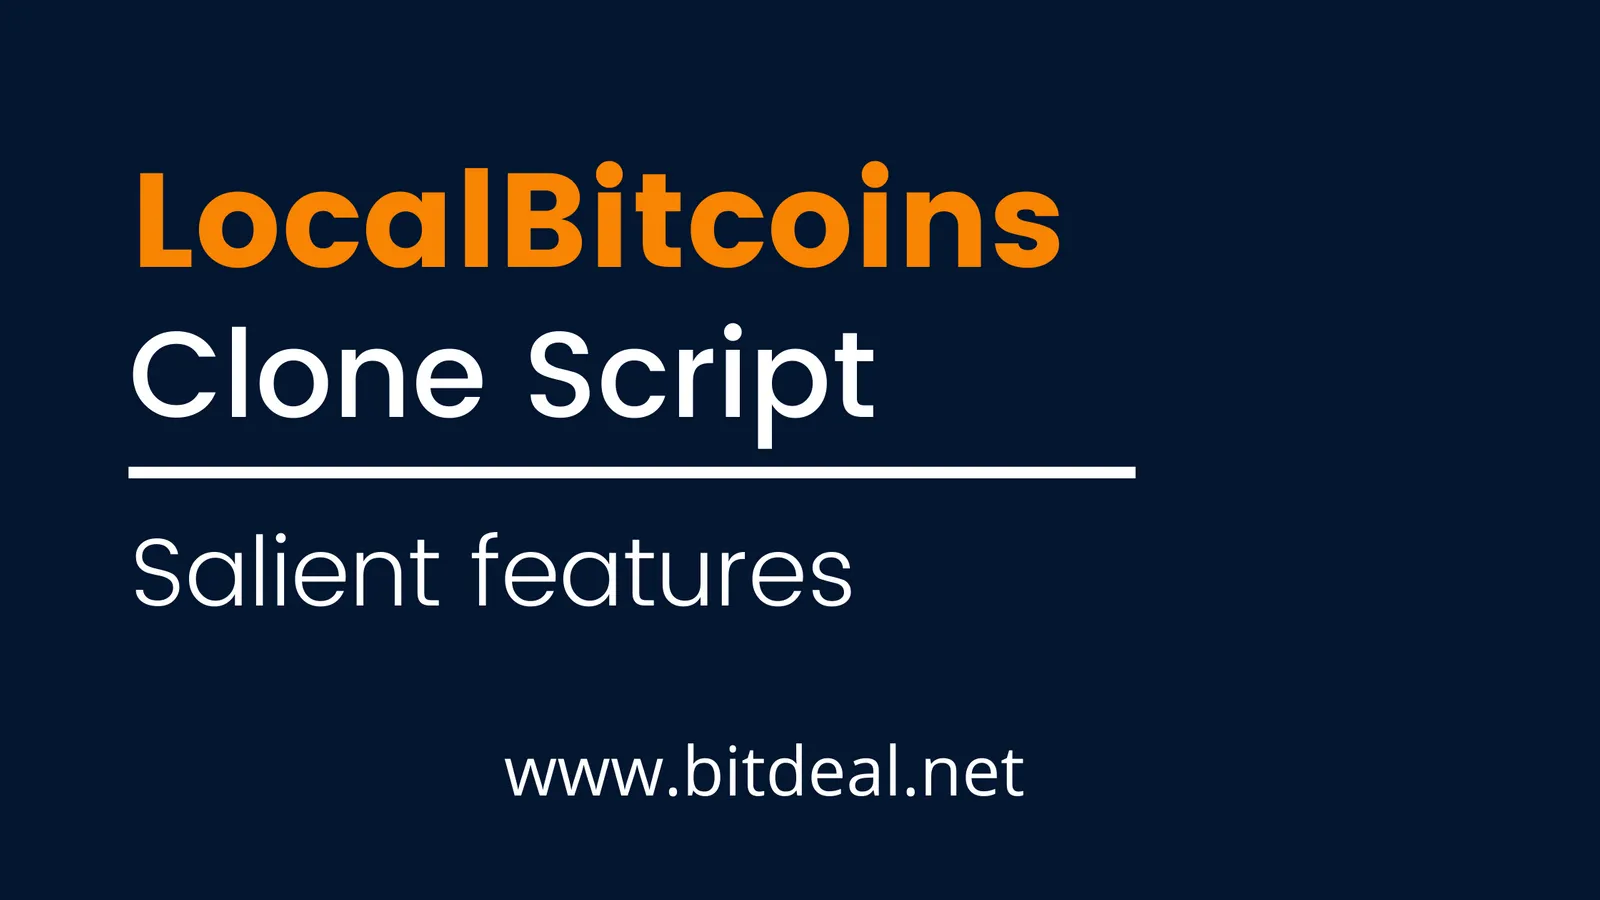 Salient features of Localbitcoins Clone Script